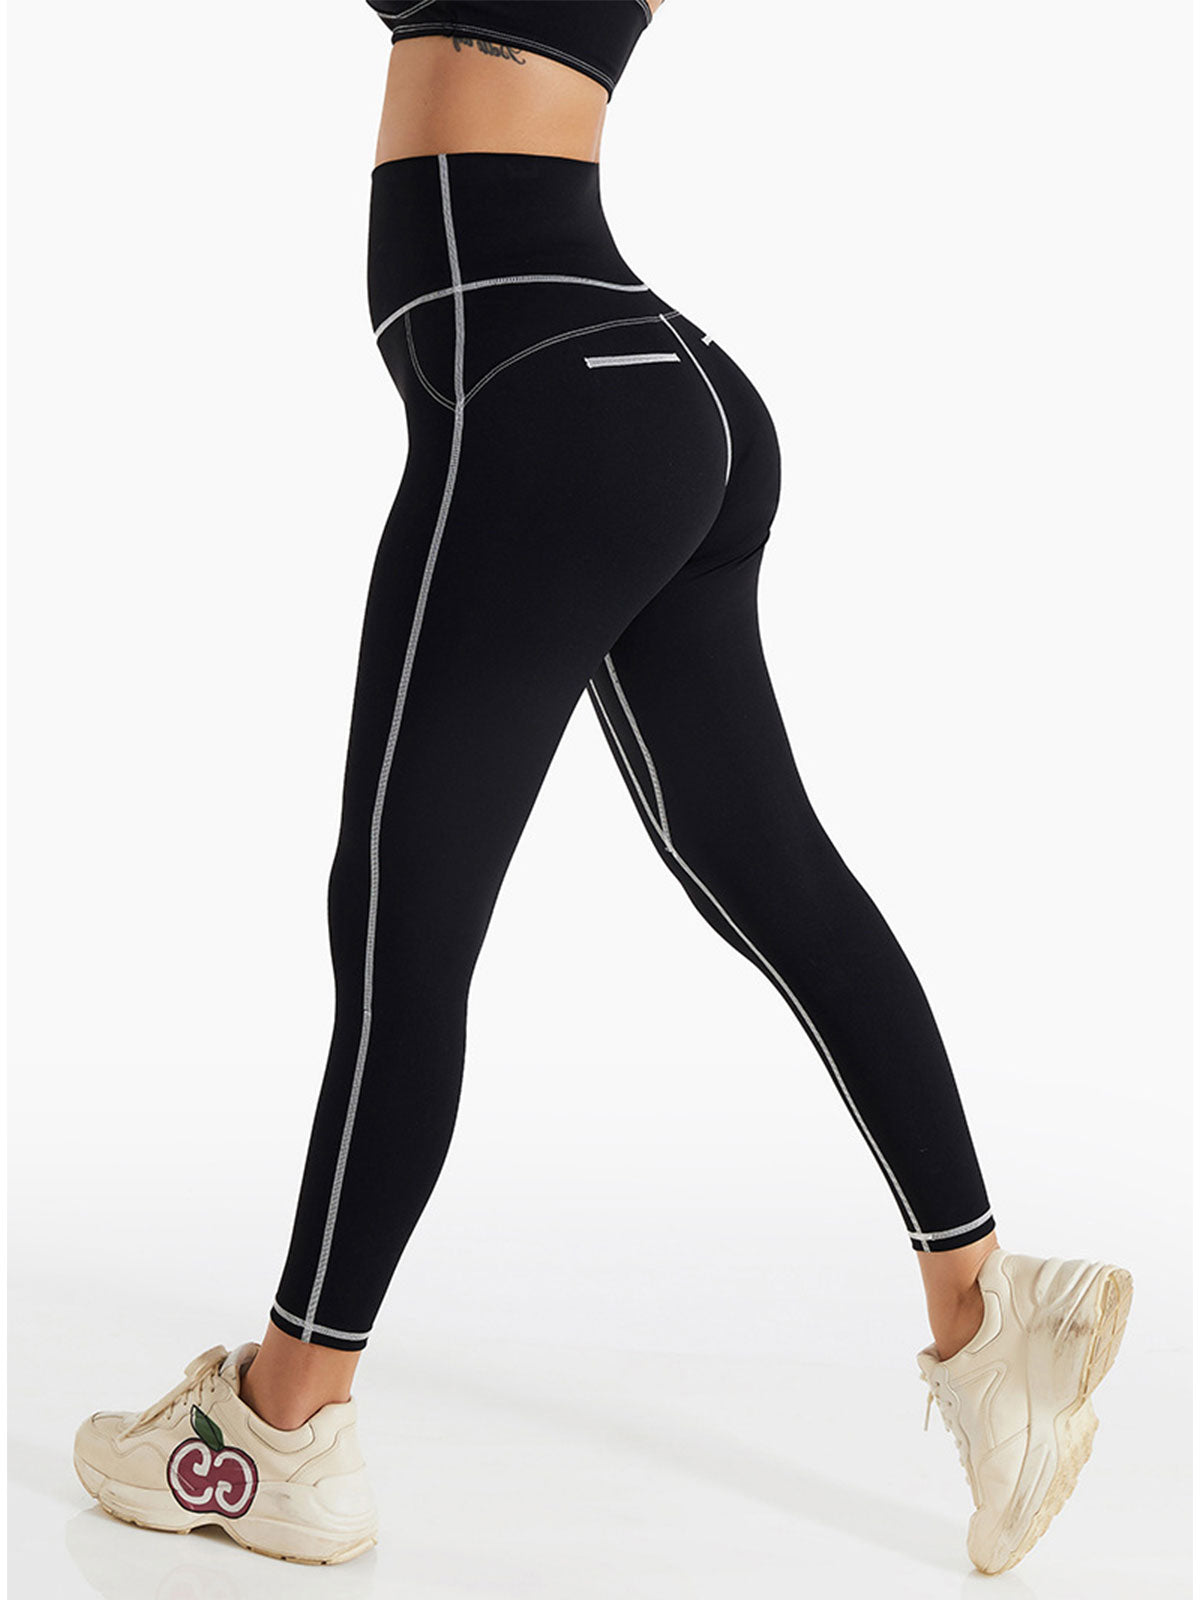 Damen Lässige Yoga Hose mit hoher Taille Hüftlift Fitness Hose bauchenge Sport Leggings